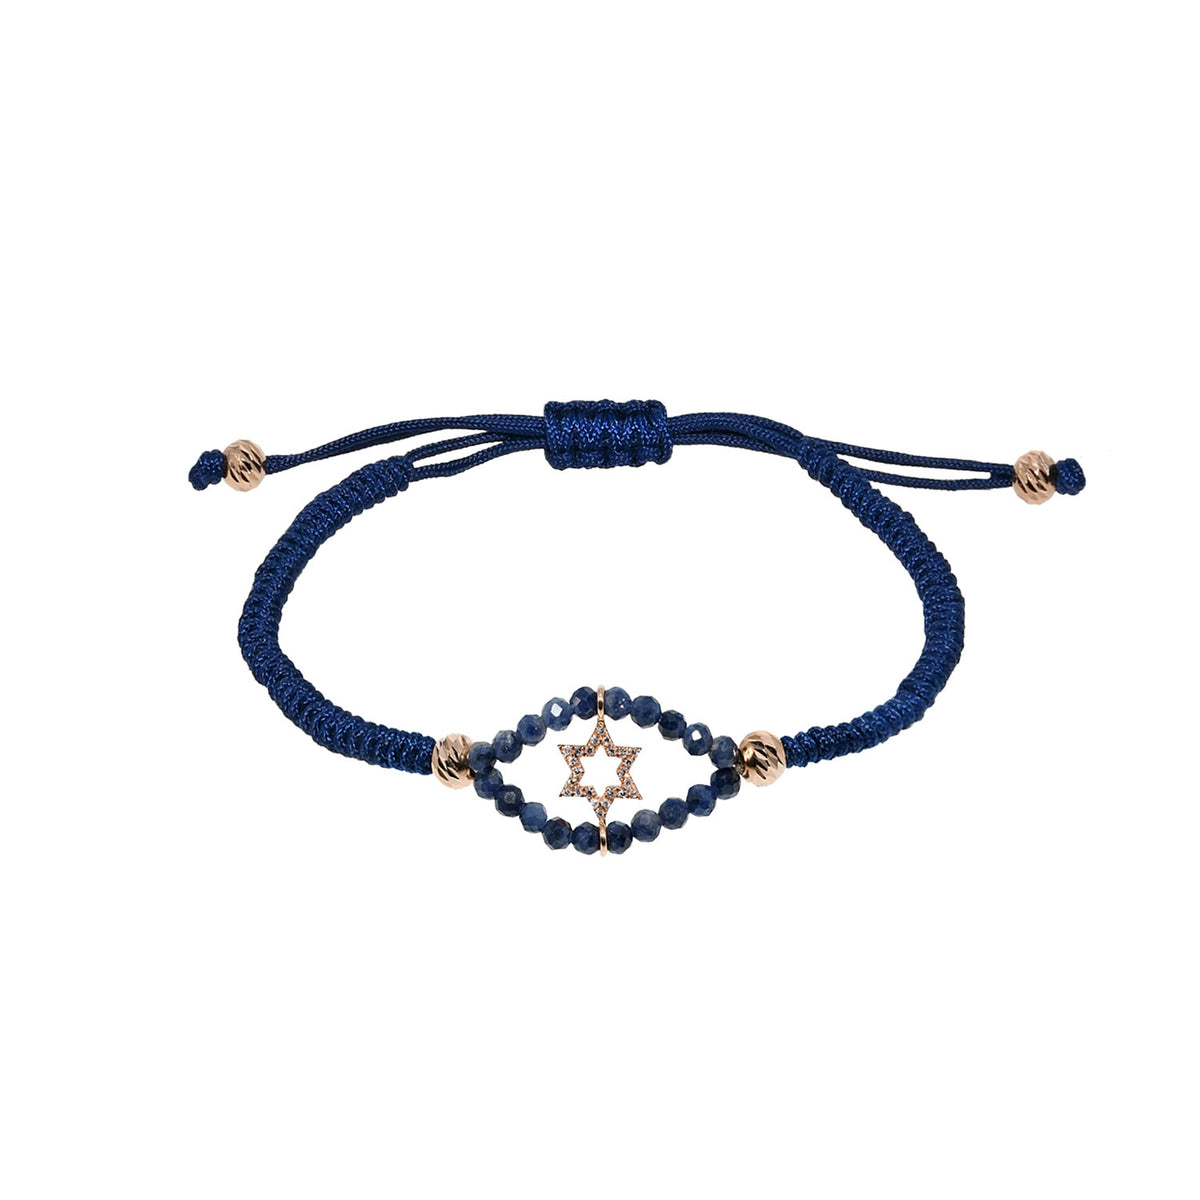 Diamond star bracelet. Star bracelet. Cord bracelet. Sapphire bead bracelet